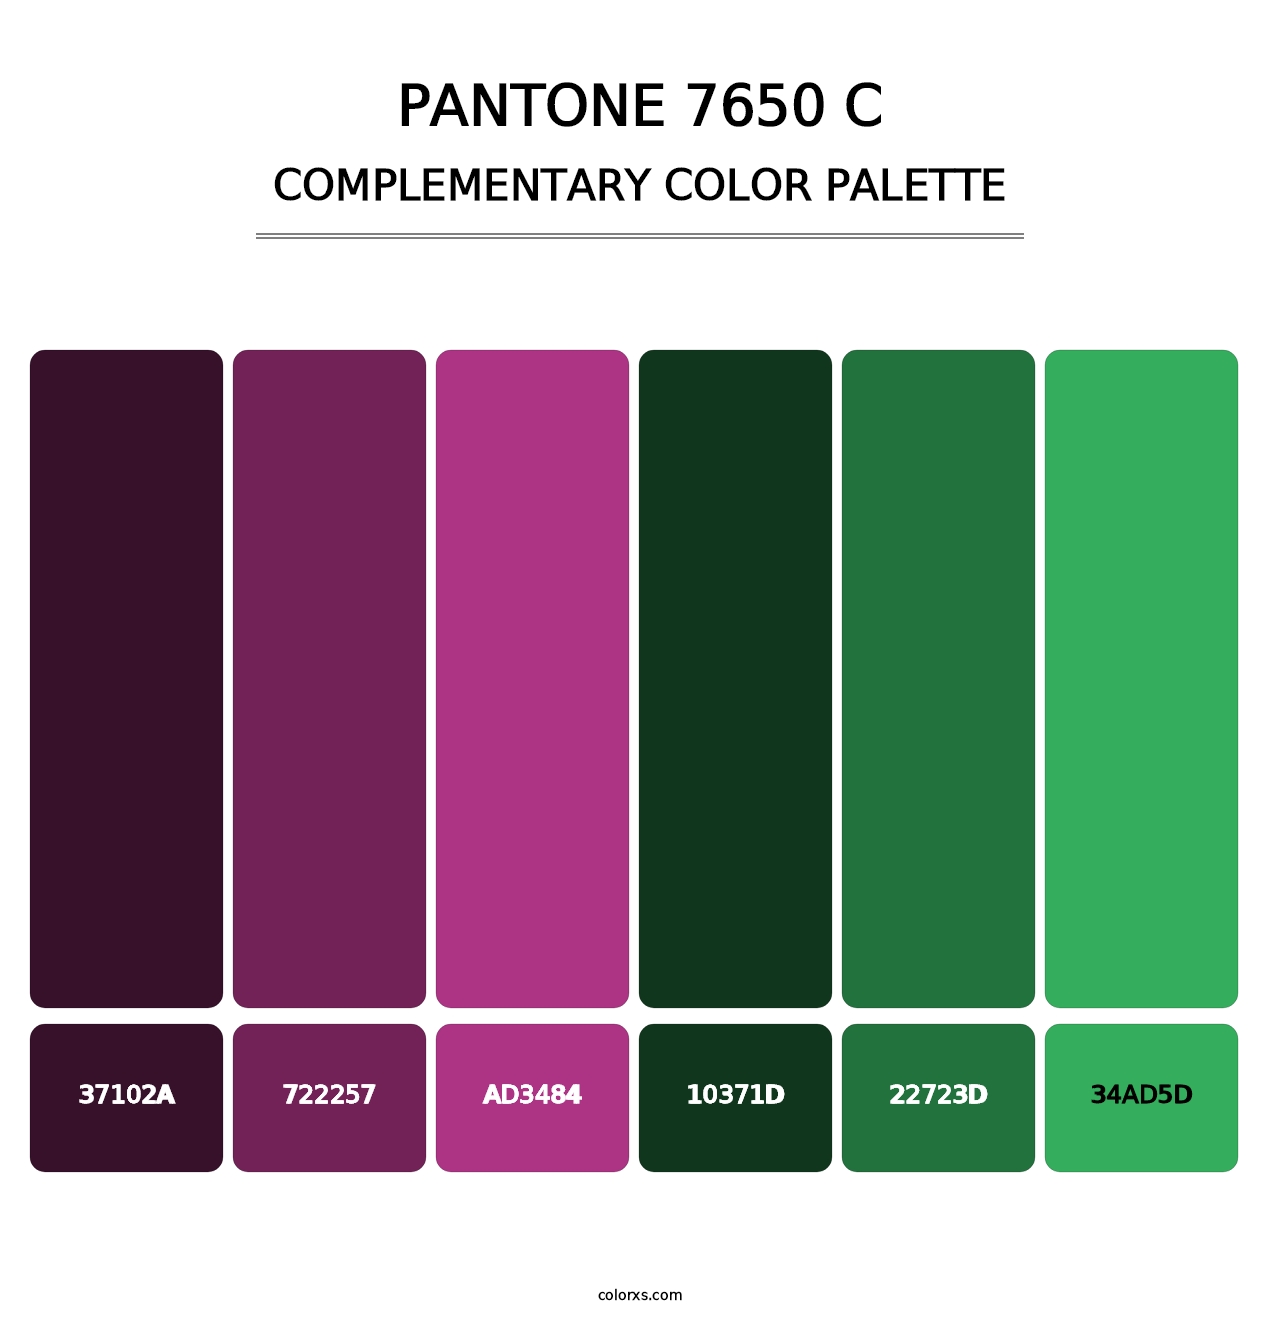 PANTONE 7650 C - Complementary Color Palette